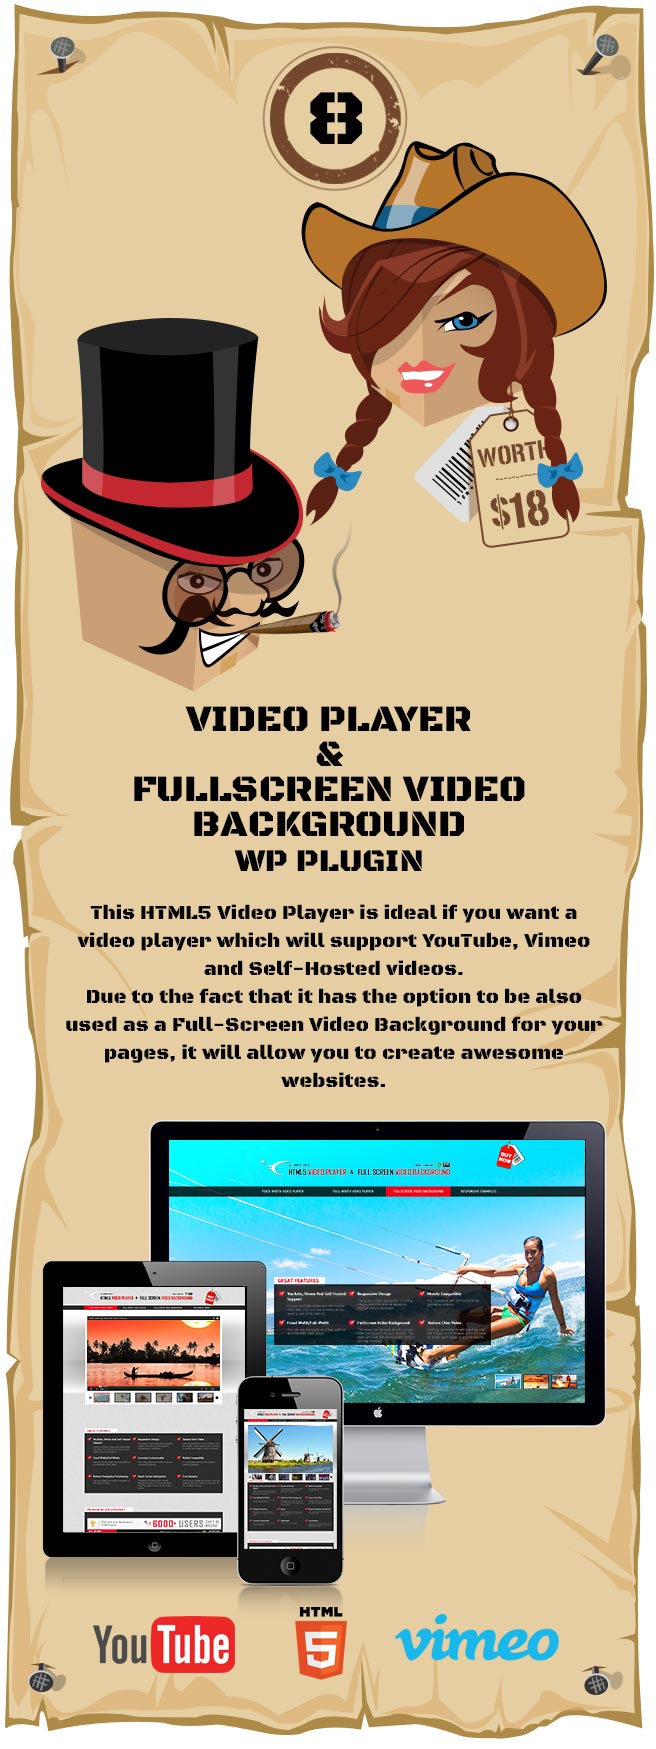 Video Player & FullScreen Video Background - WP Plugin